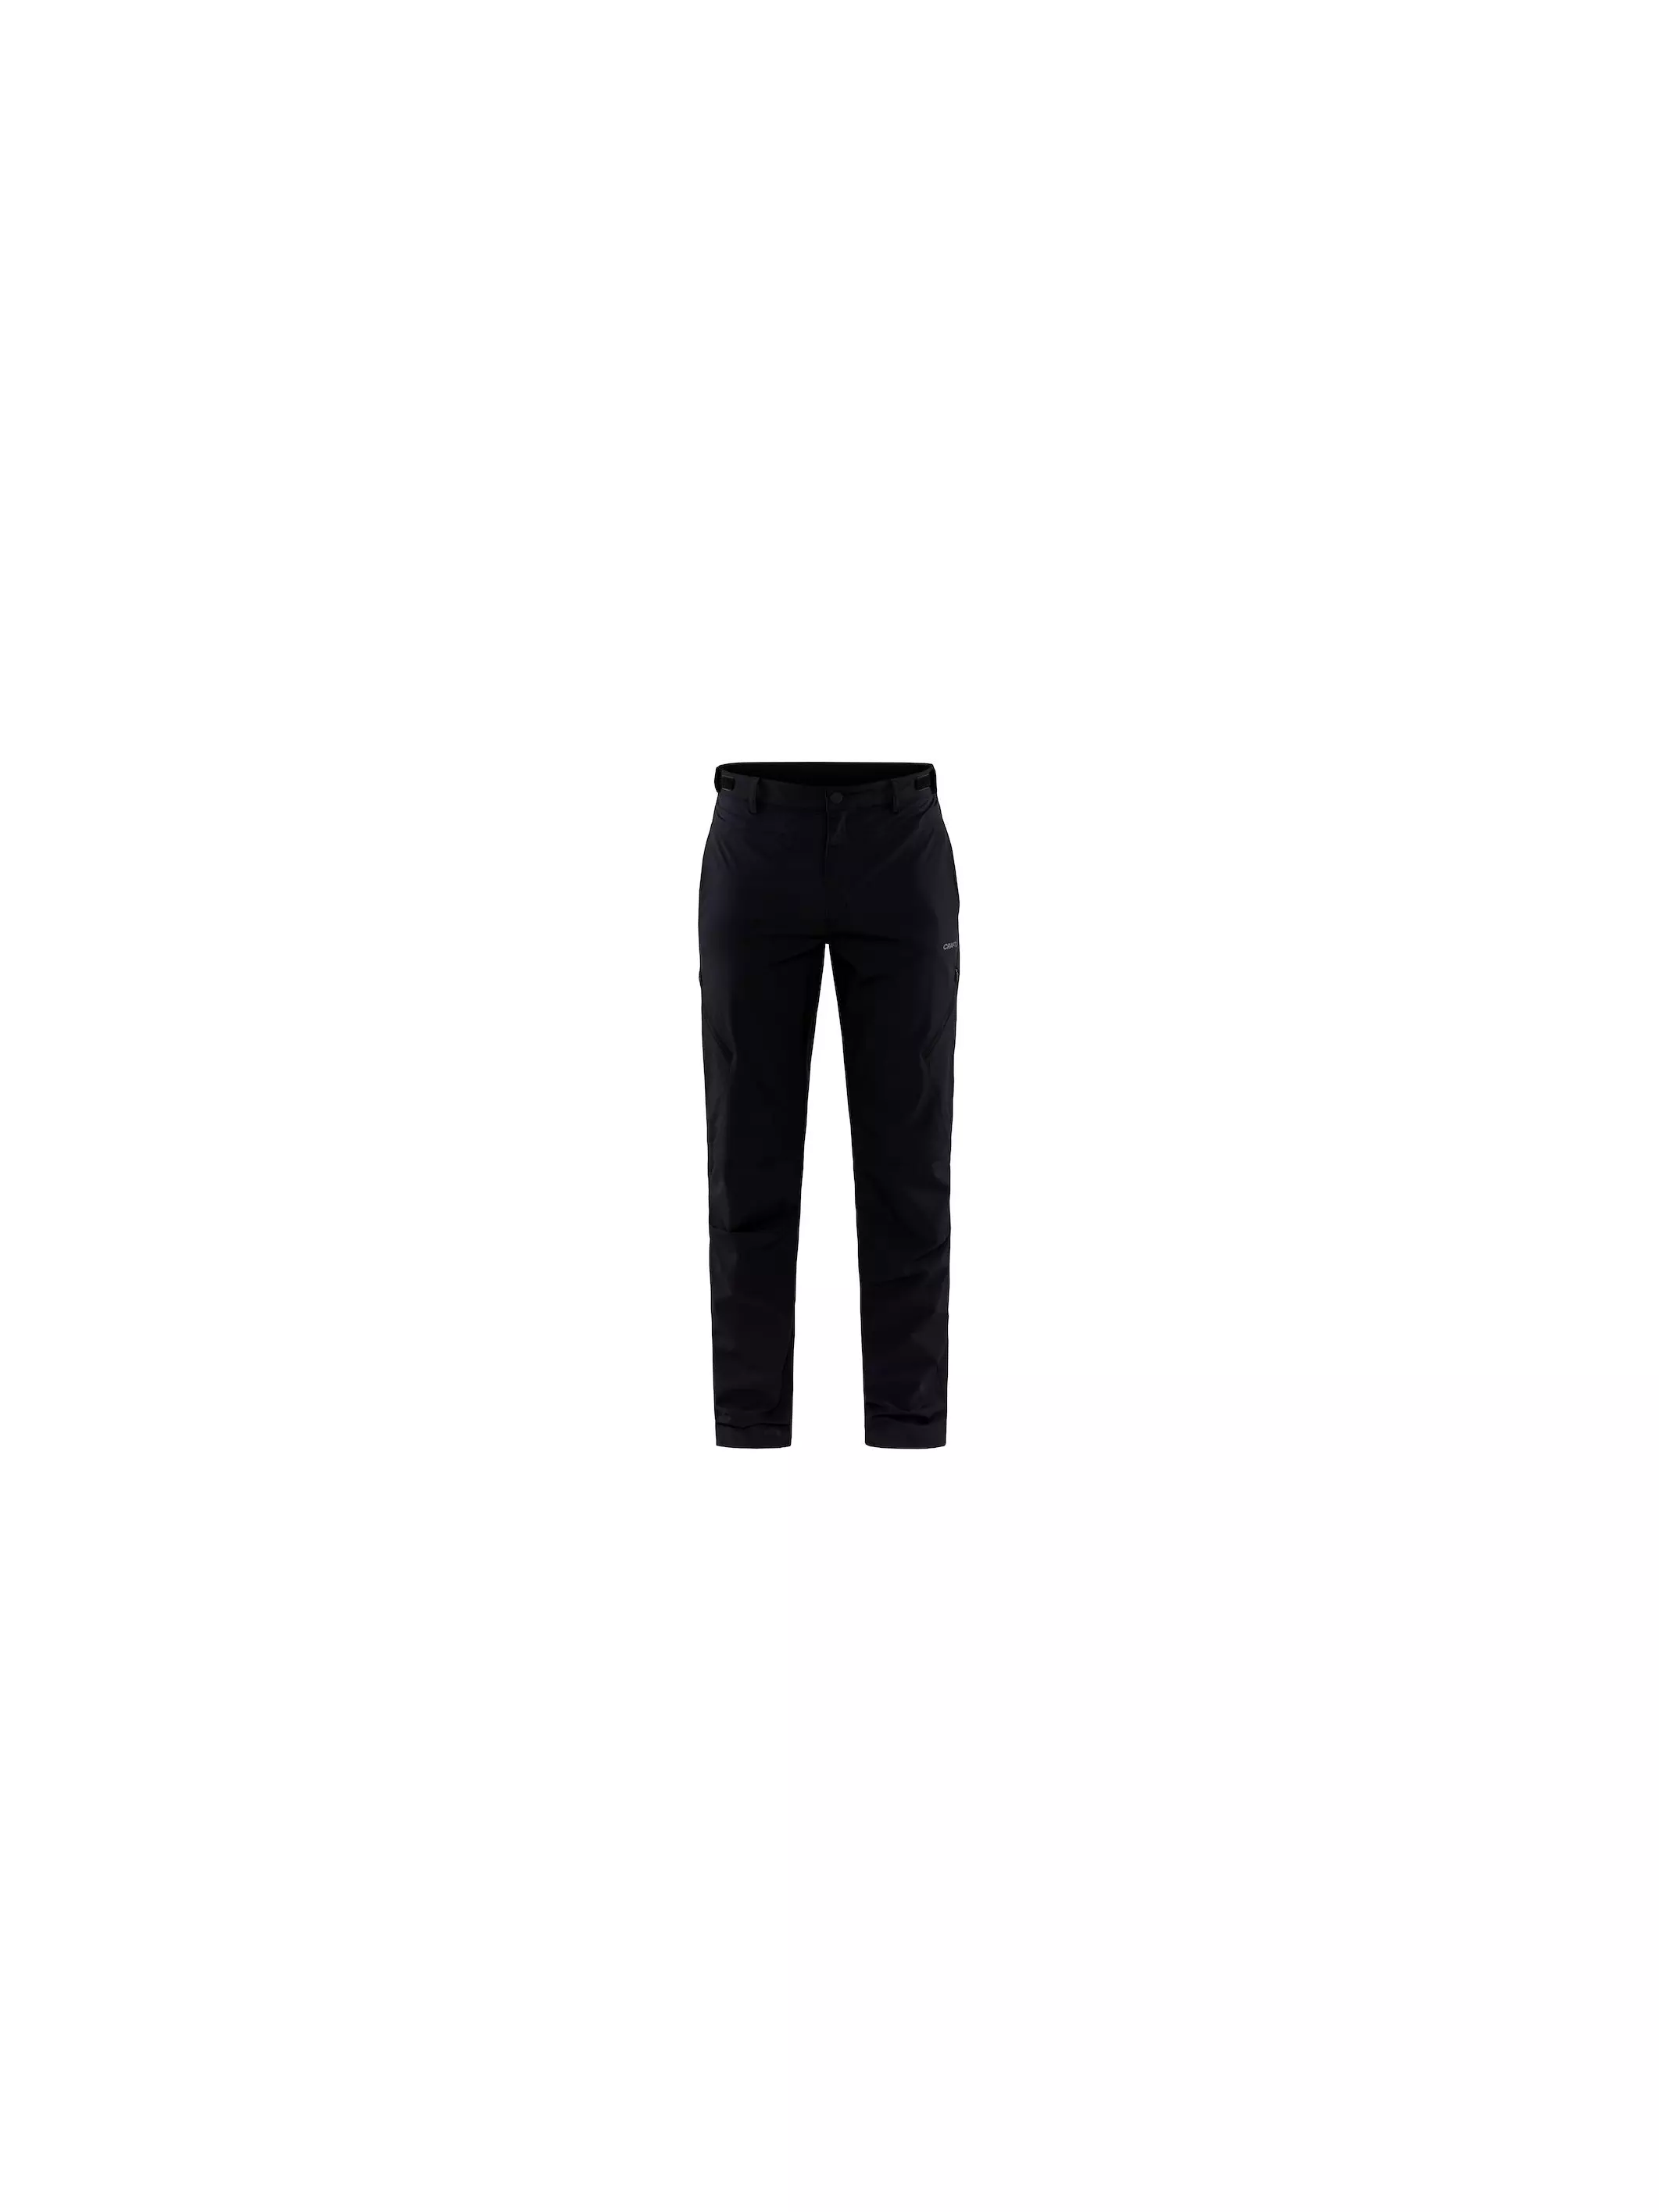 Pantalons & Collants Craft ADV EXPLORE TECH PANTS M - 1910392